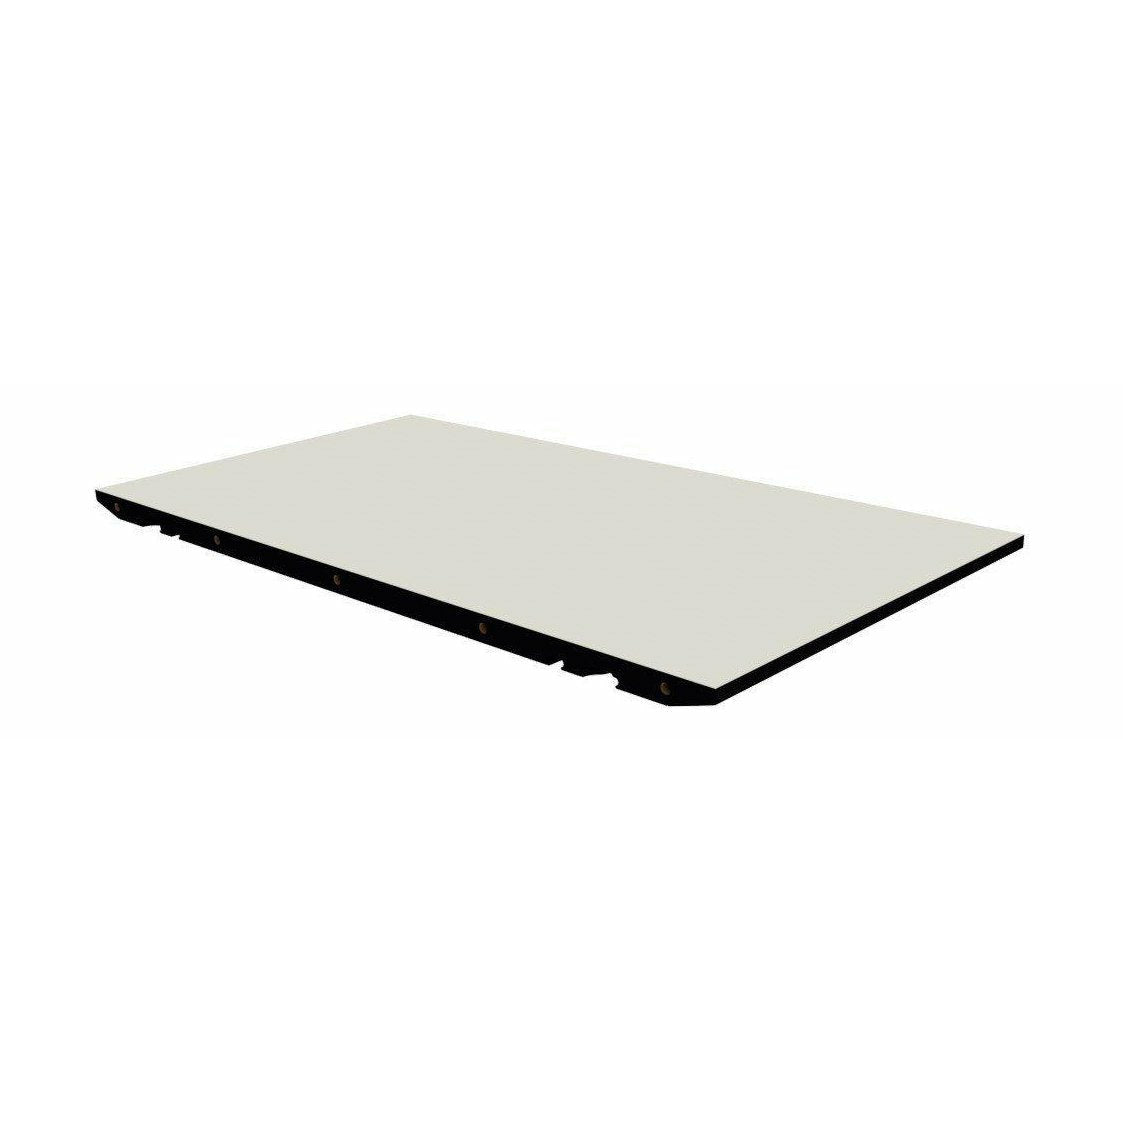 Andersen Furniture T1 ekspansionsplade, hvid laminat, 50x95 cm